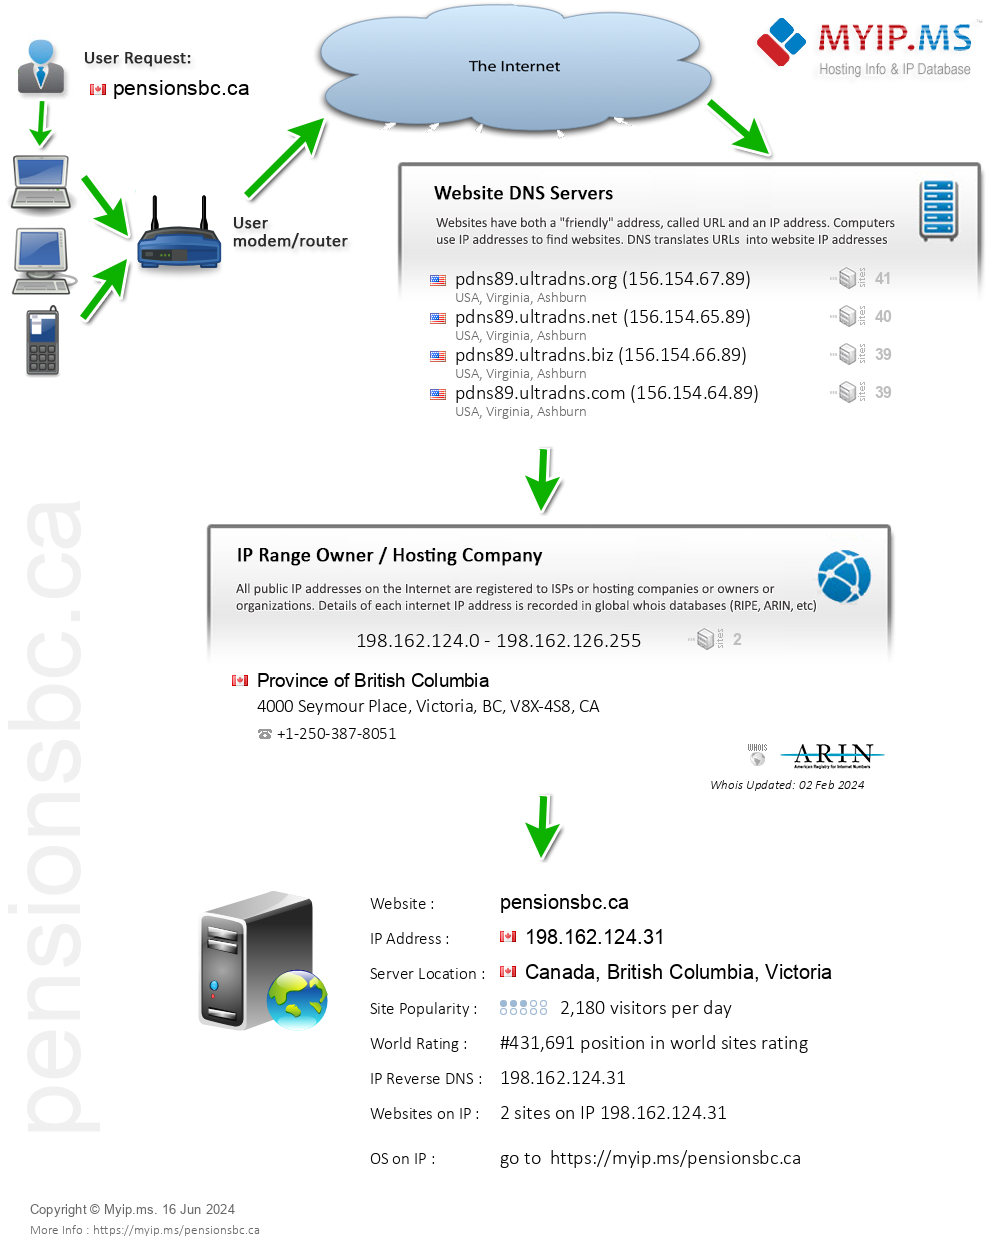 Pensionsbc.ca - Website Hosting Visual IP Diagram